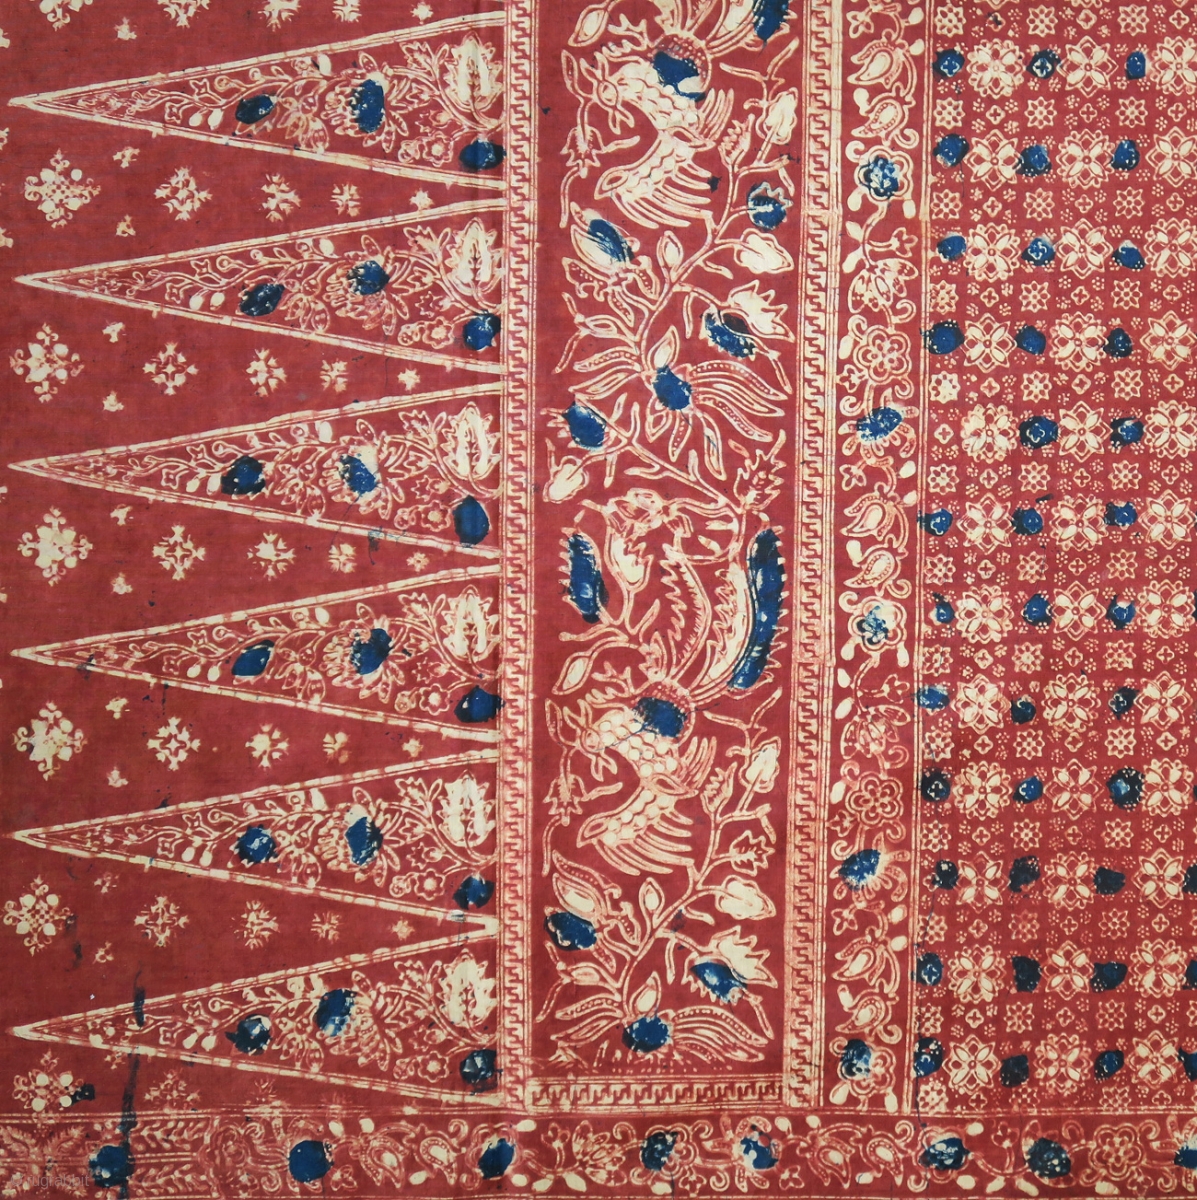 Sumatra Early 20th C Batik  Hip wrapper kain panjang 